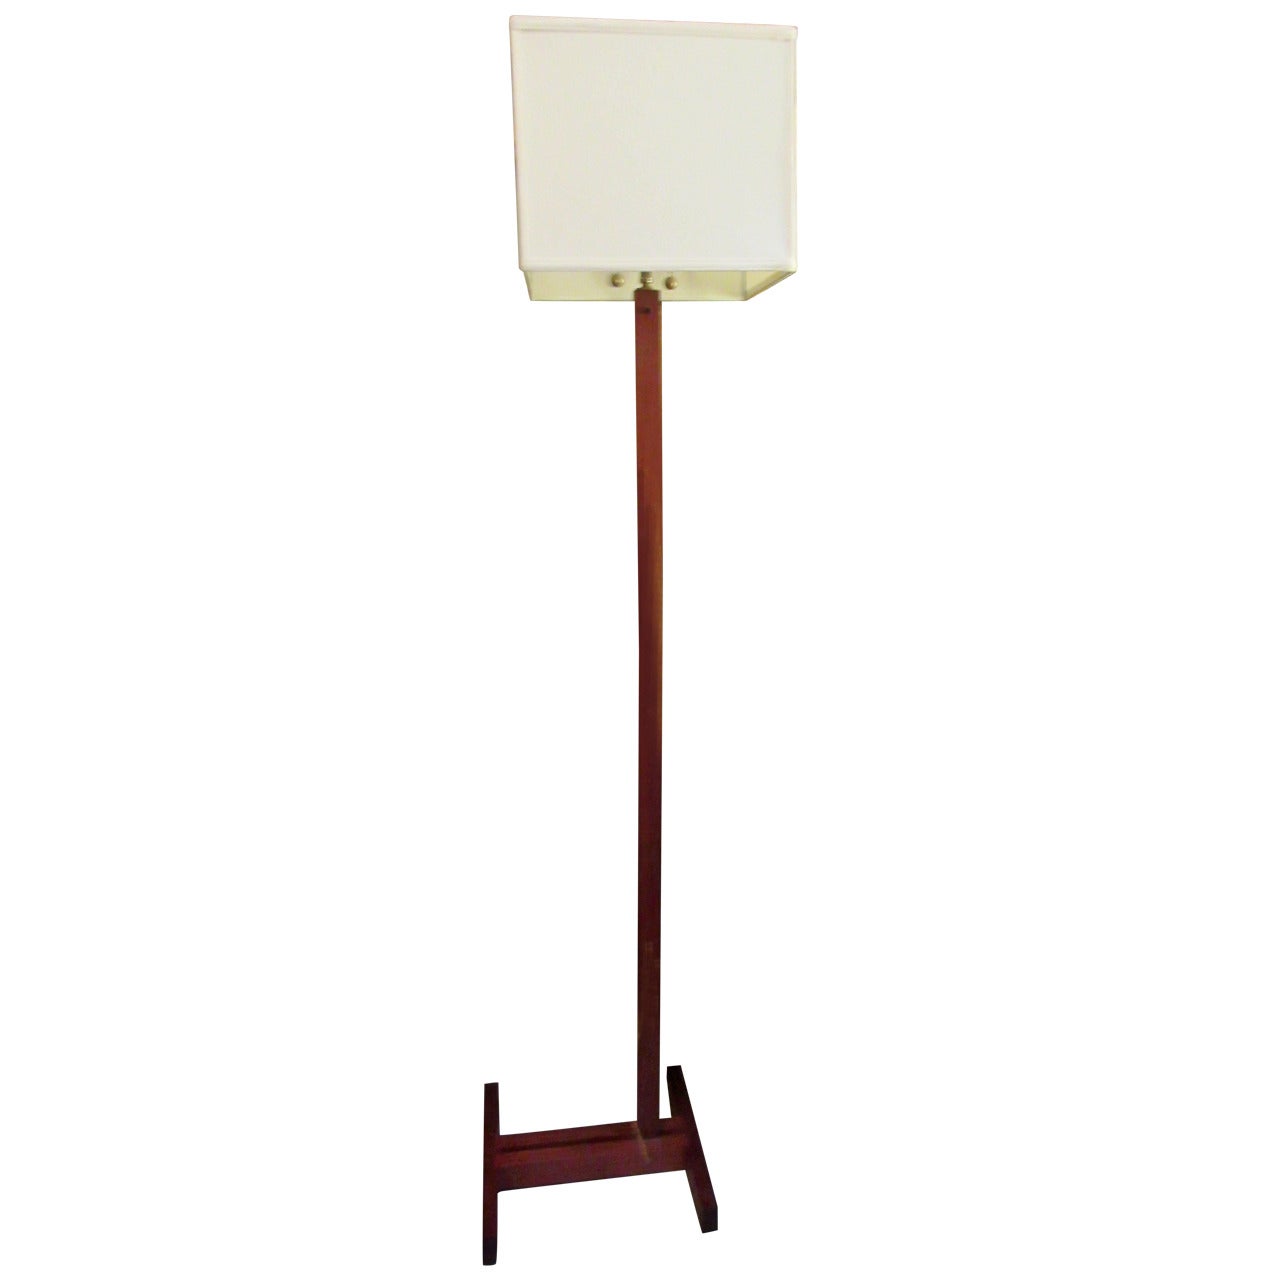 American Craftsman Floor Lamp